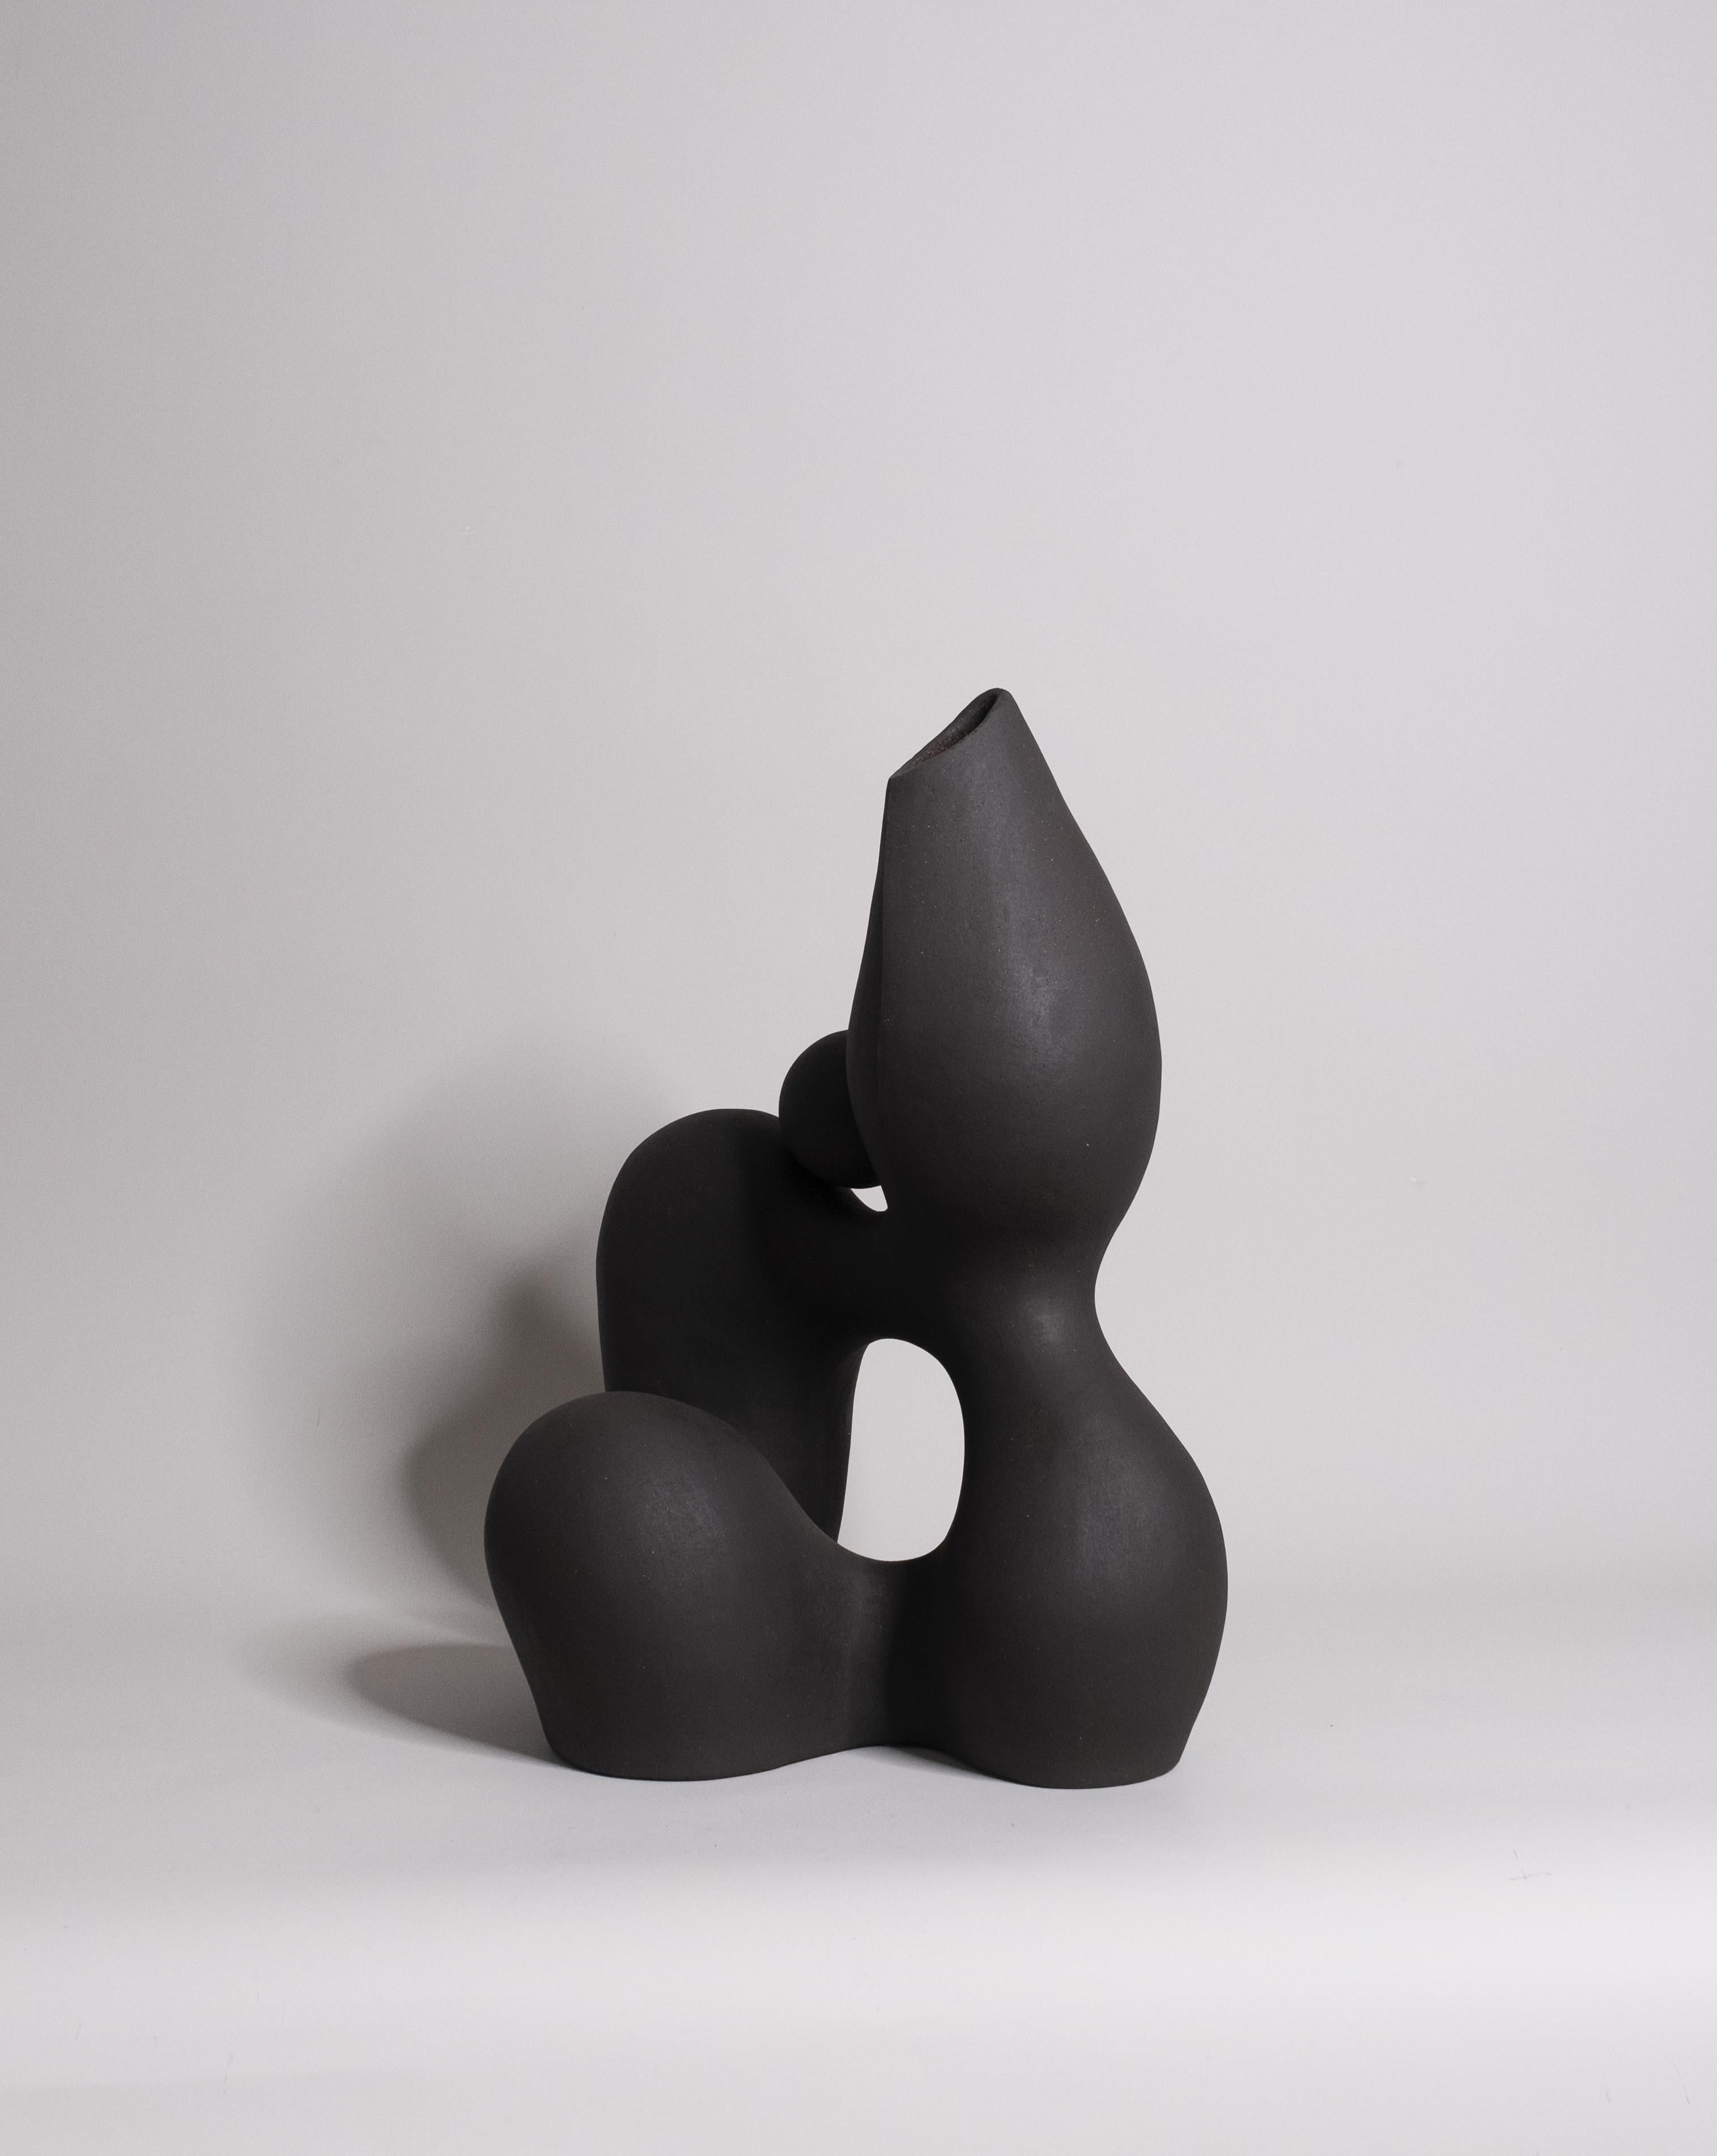 Sleeping Stone II by Terre Brute
Dimensions: 47 x 36 x 25cm
Materials: Unglazed Black stoneware.

